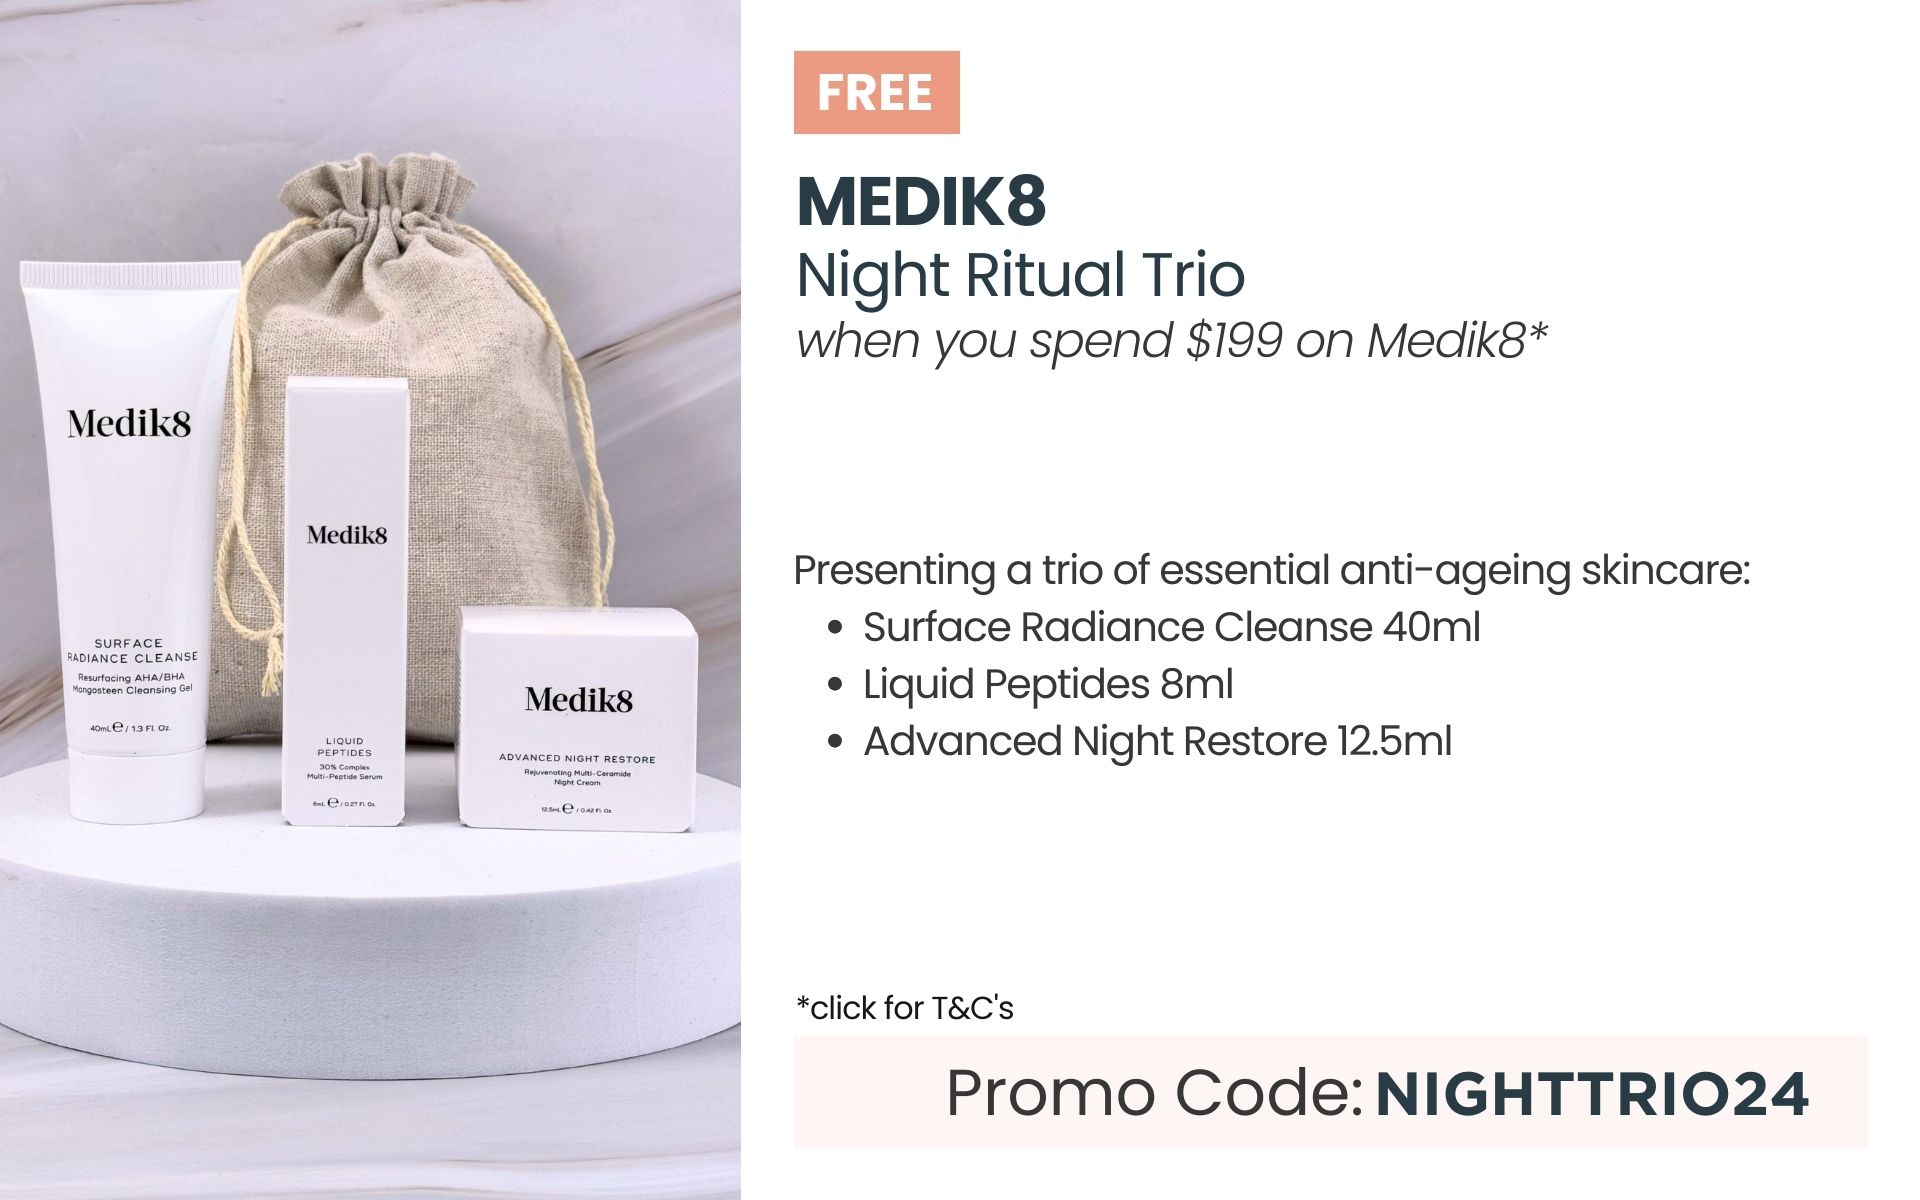 Free Medik8 Night Ritual Trio. Min spend $199 on Medi8. Promo code NIGHTTRIO24.